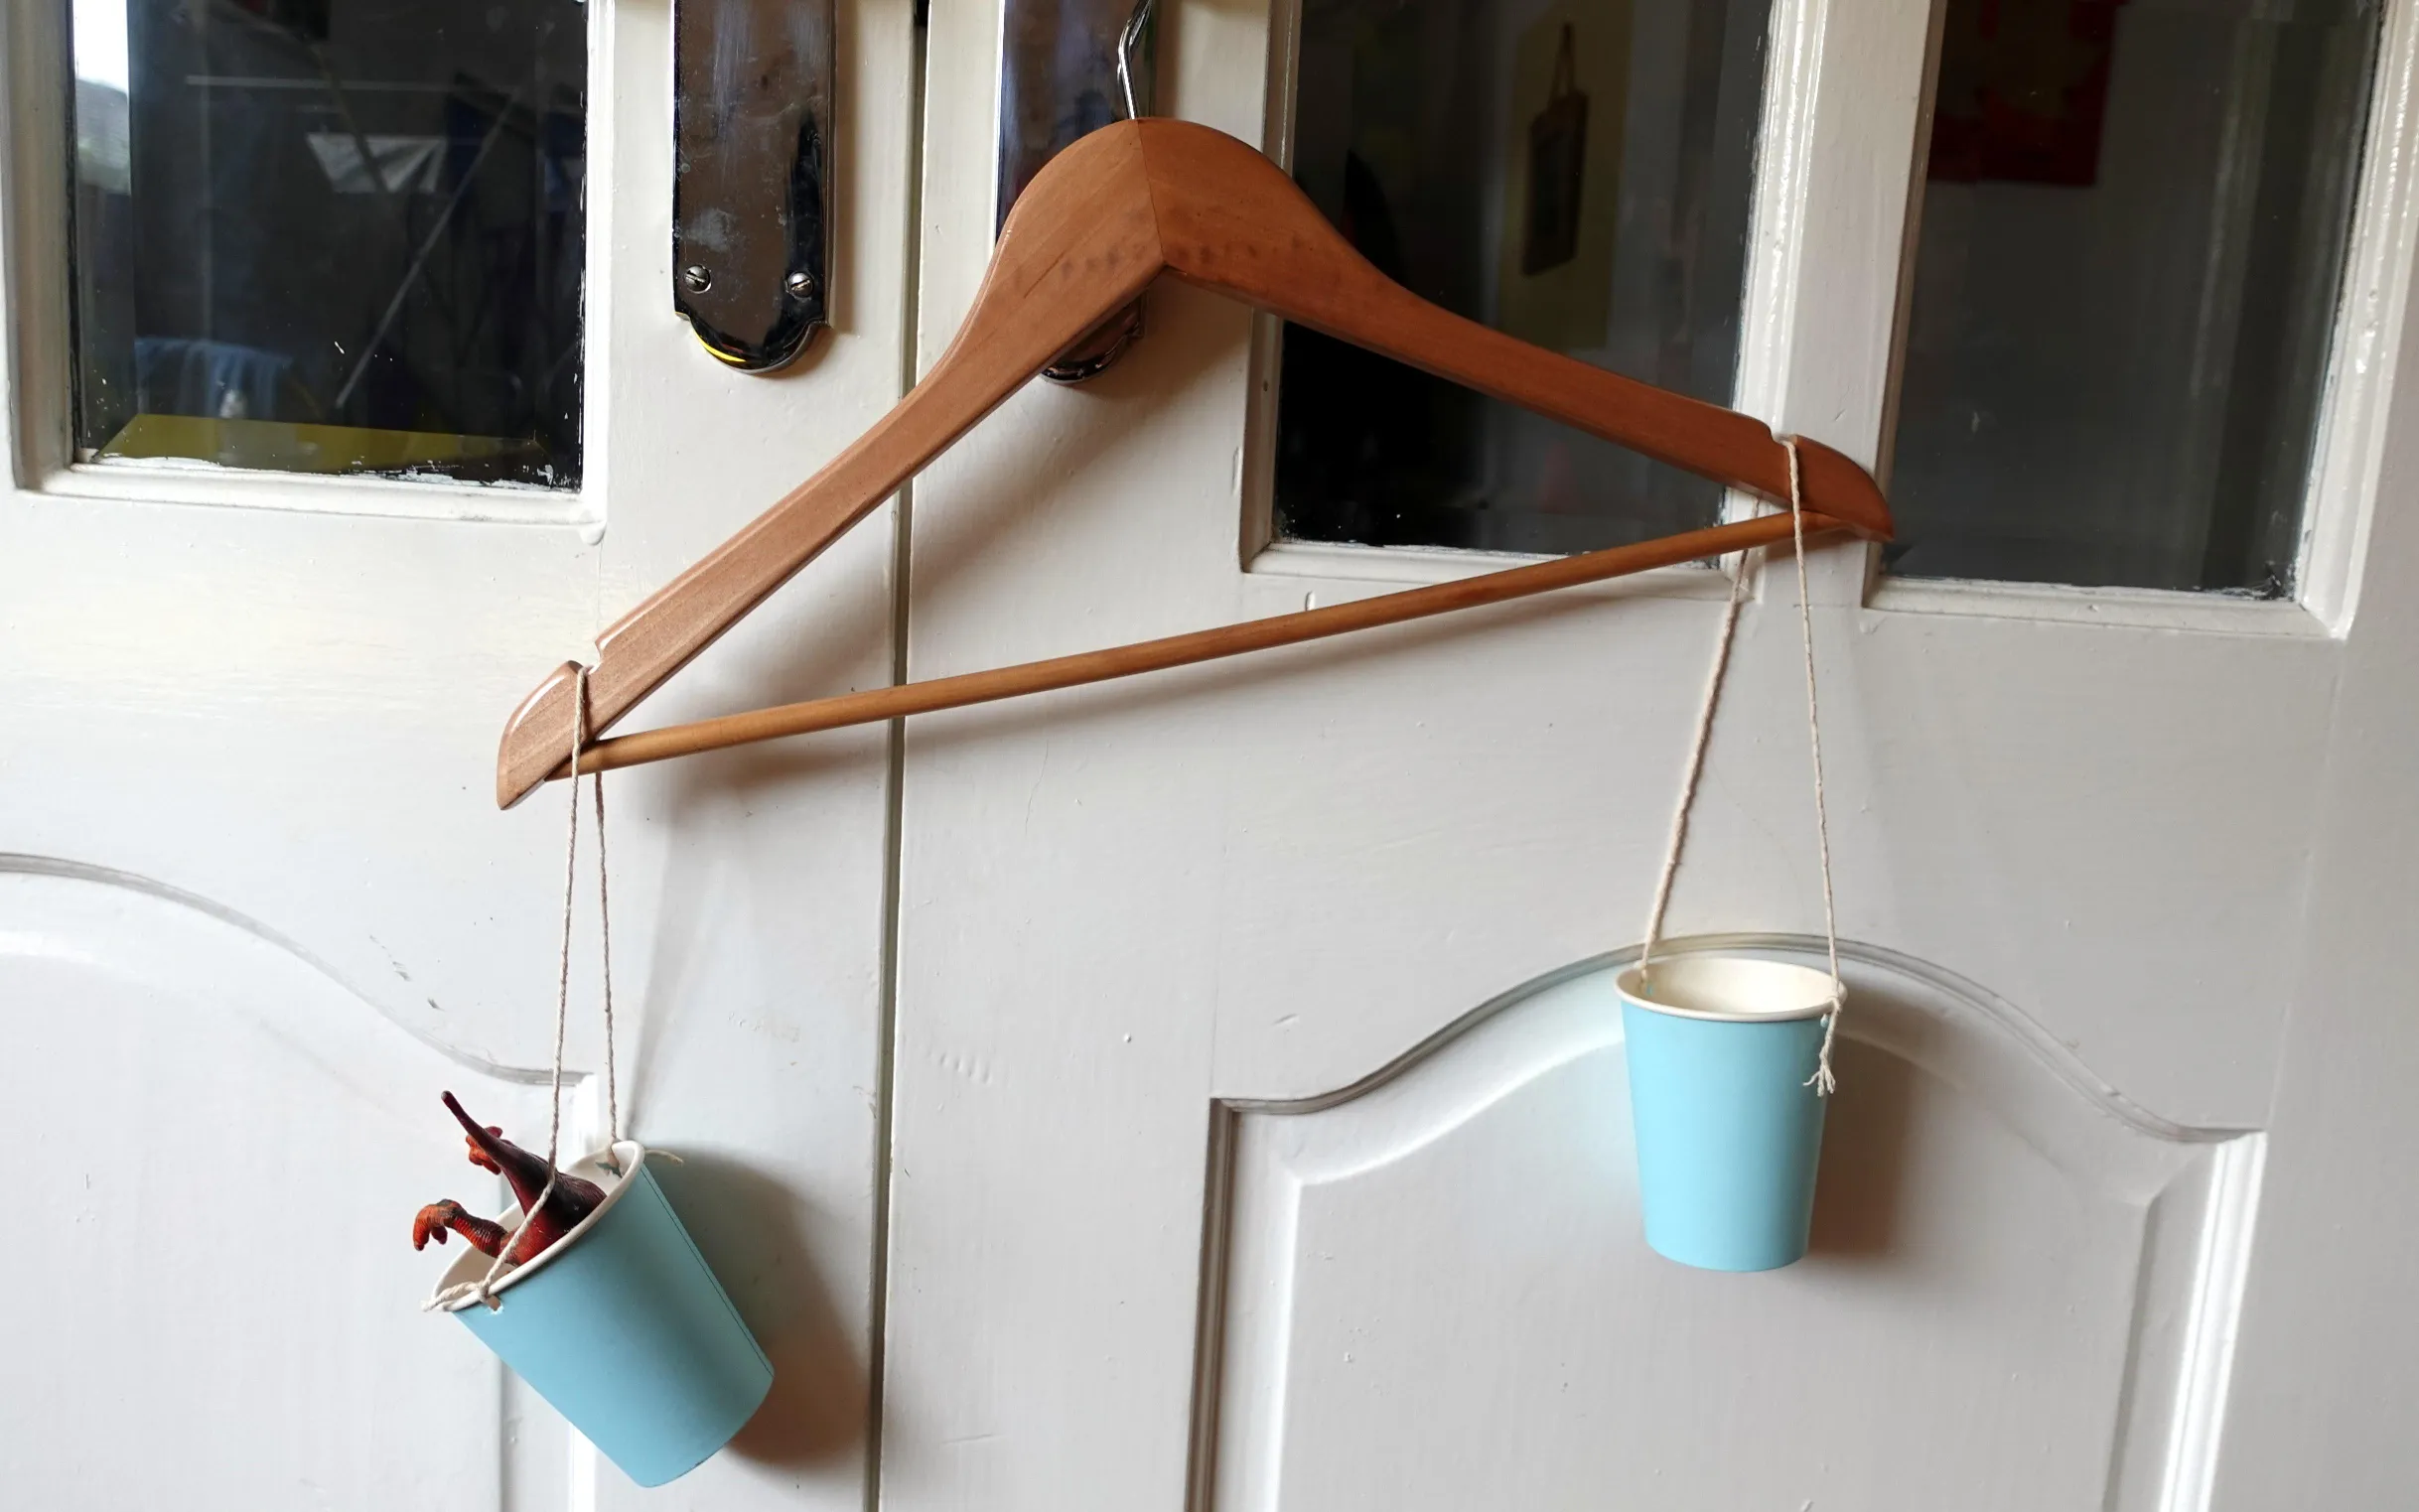 Activity Six - Clothes Hanger Balance Scale